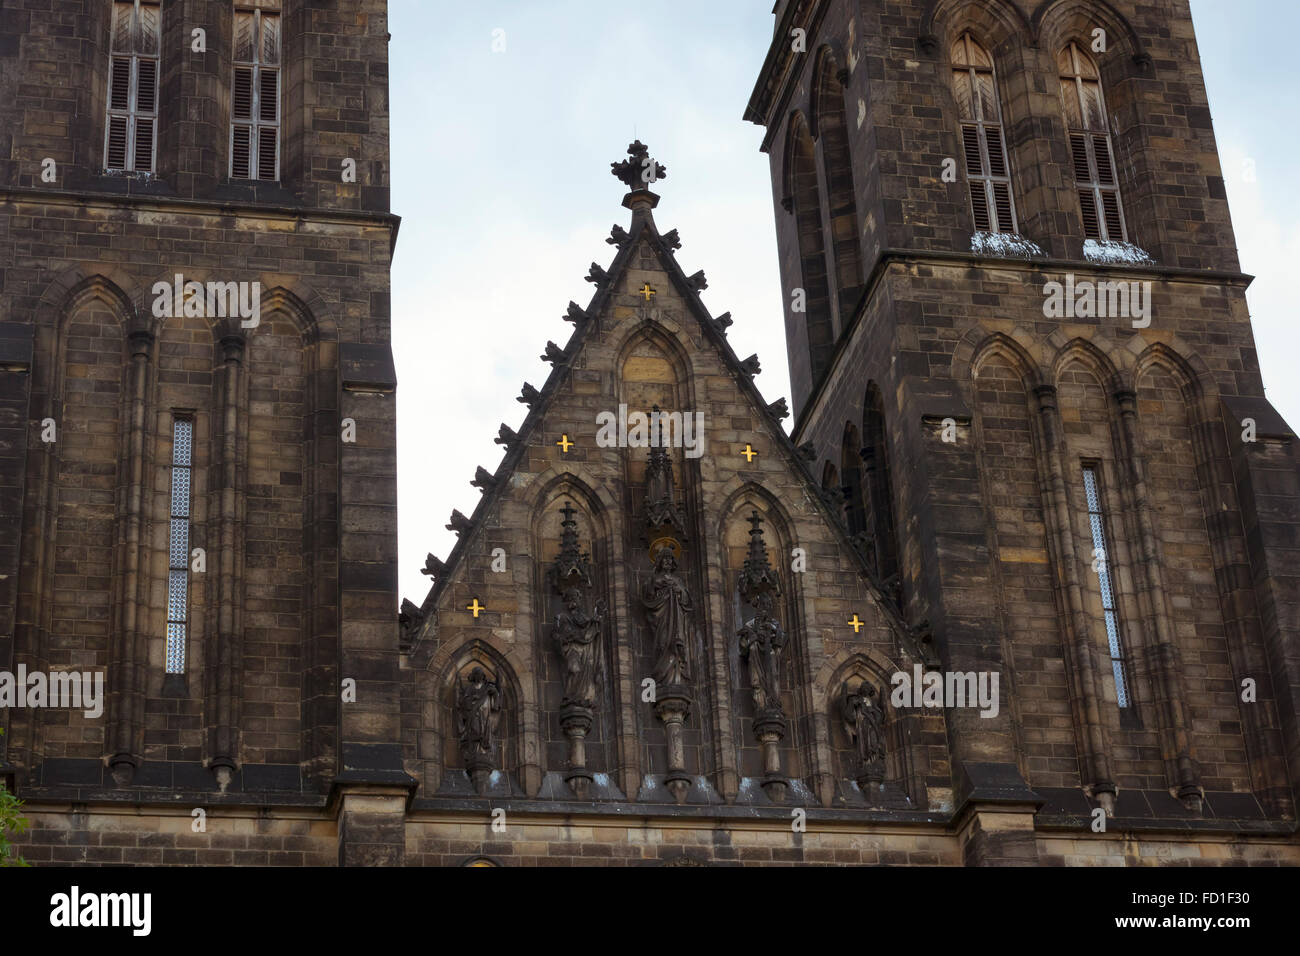 Praga, Repubblica Ceca - 28 agosto 2015: San Pietro e Paolo Cattedrale (Bazilika svateho Petra a Pavla), Vysehrad Foto Stock